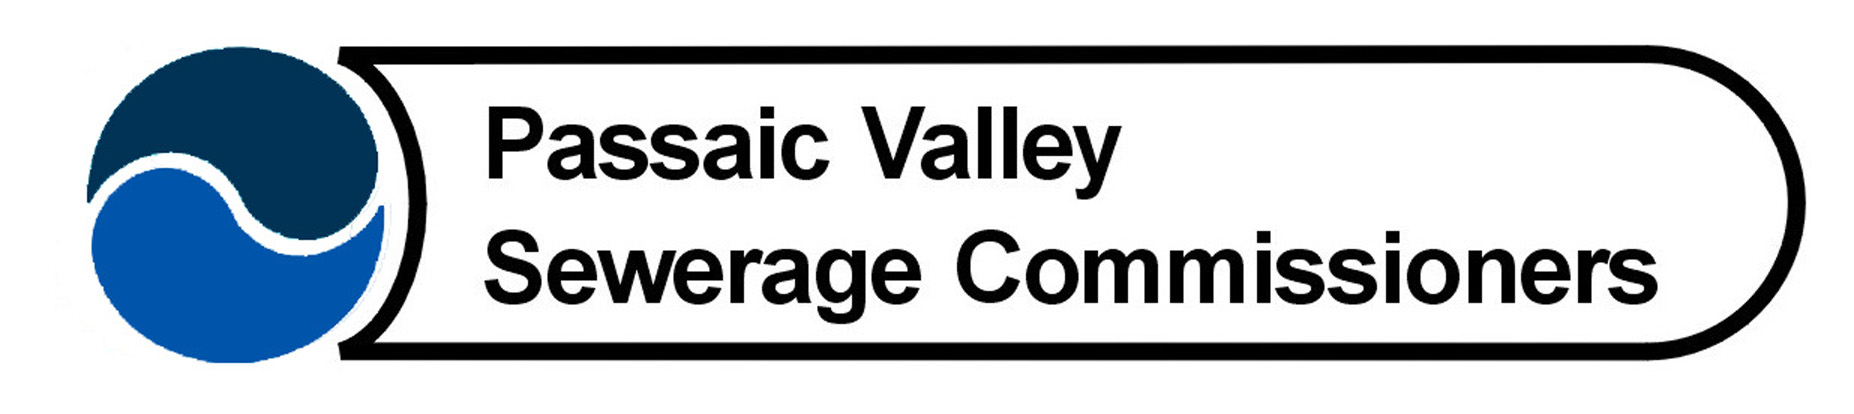 PassaicValley Sewerage Commission